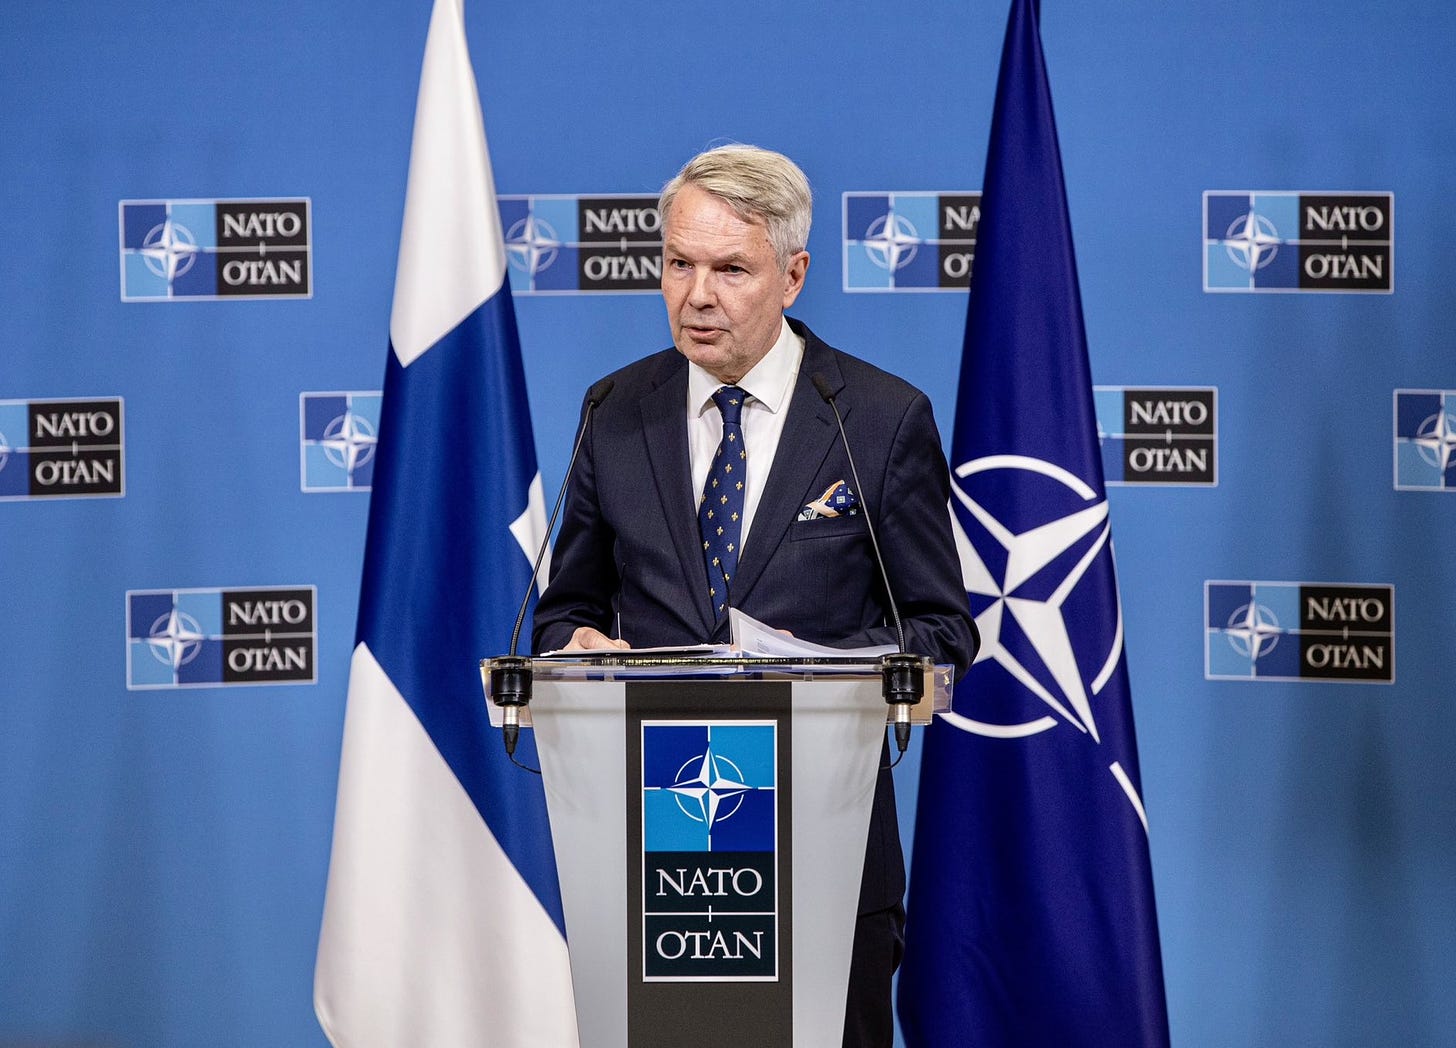 Finnish Mission at NATO, Twitter